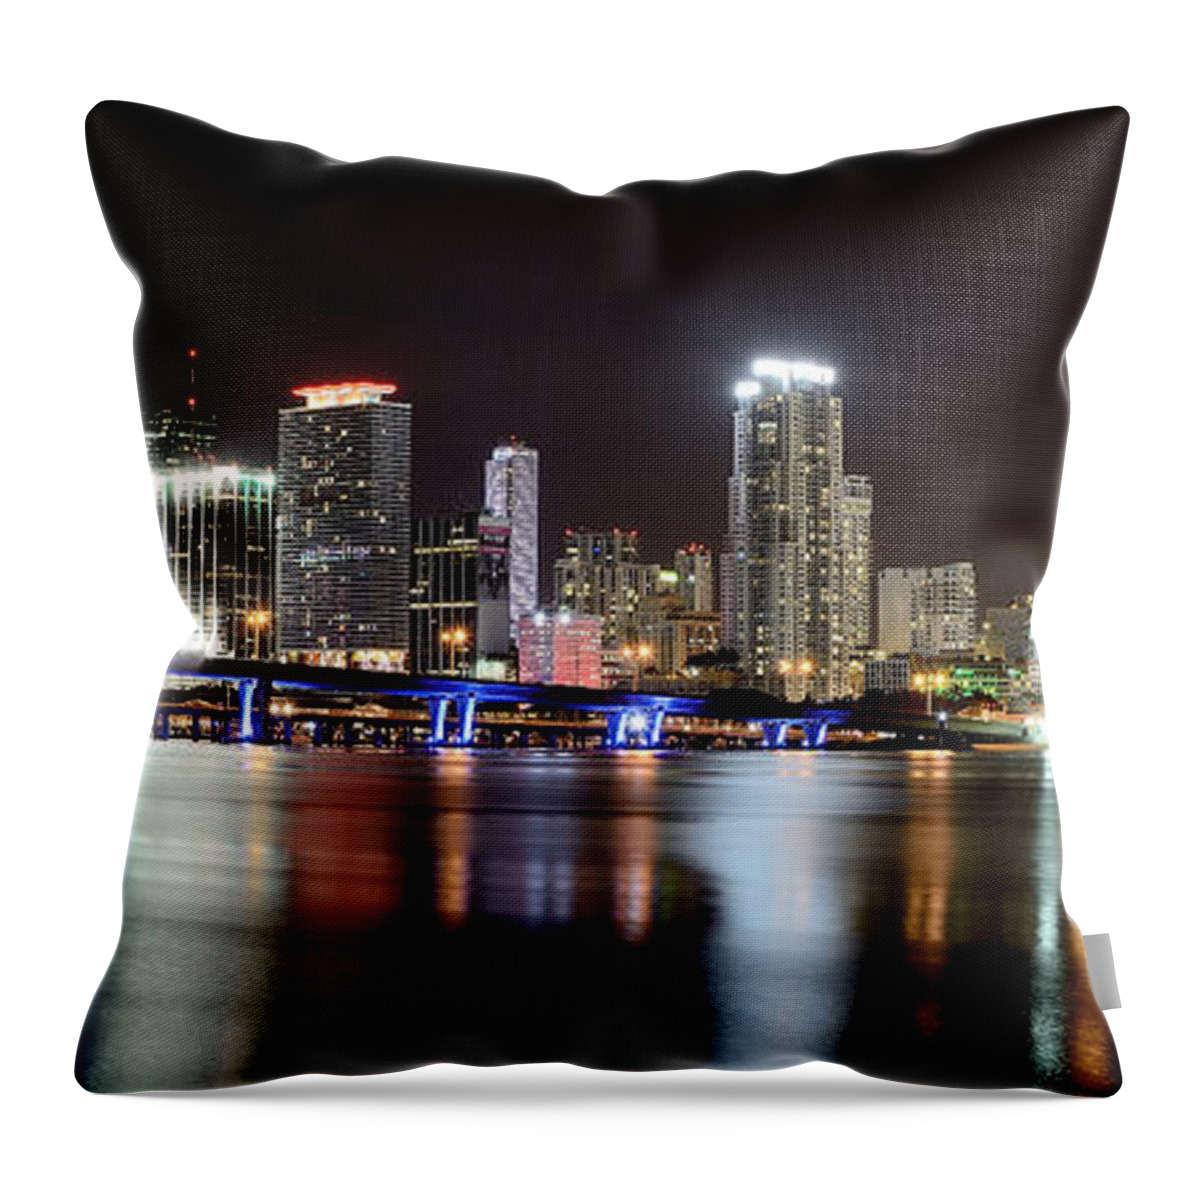 Miami Throw Pillow featuring the photograph Miami - Florida by Brendan Reals